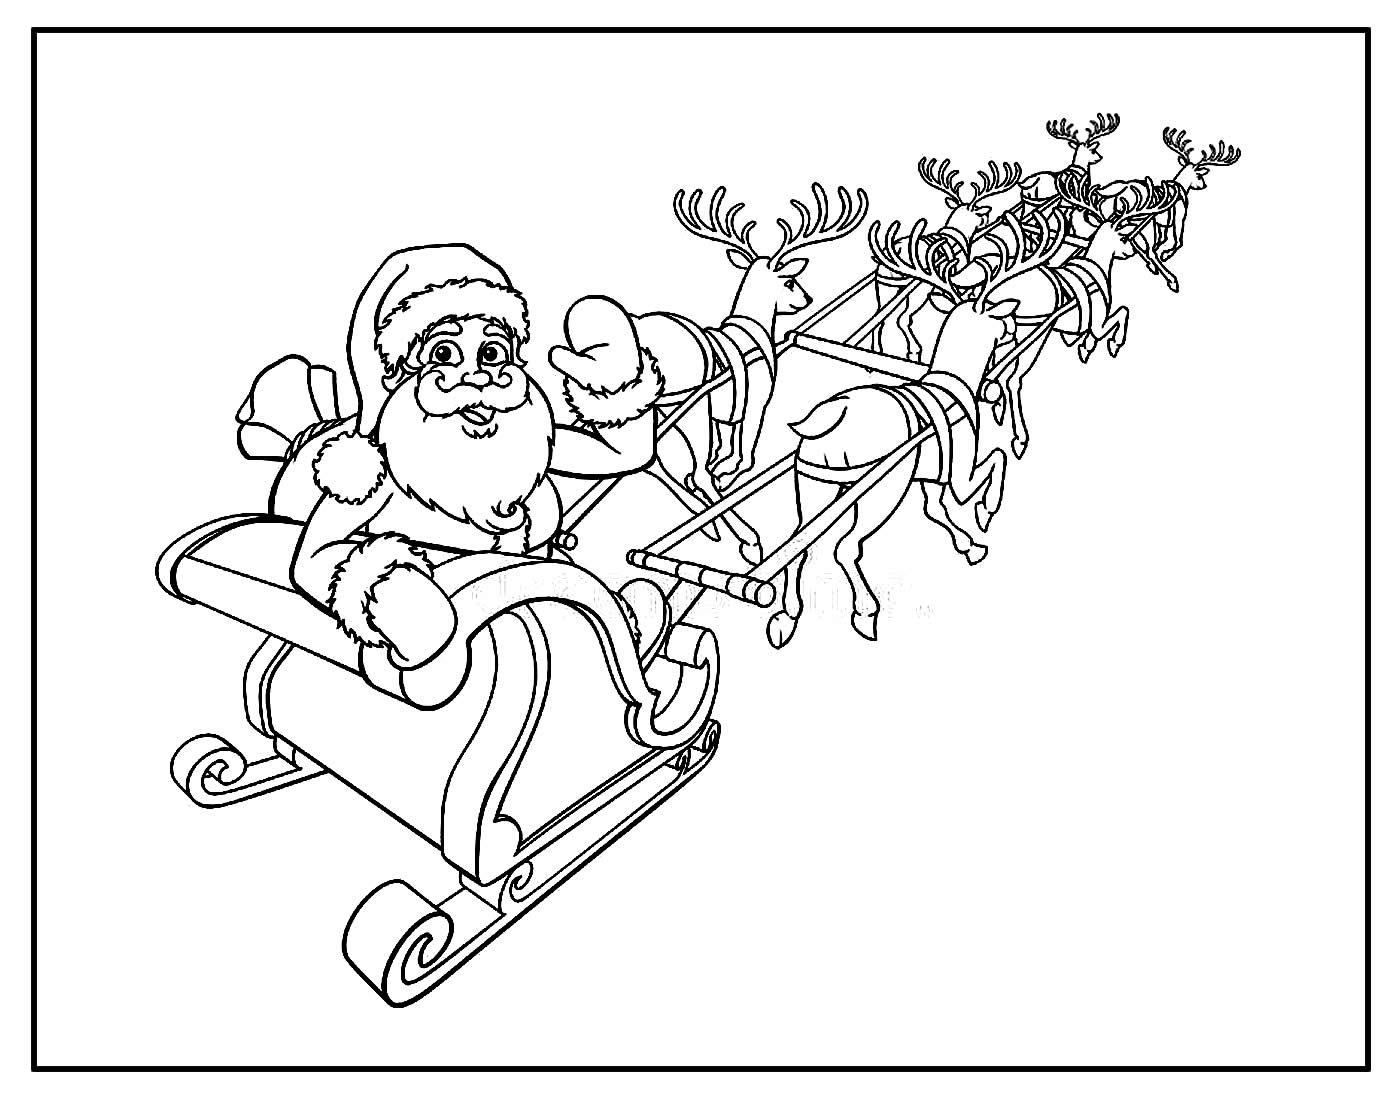 Desenho para colorir de Papai Noel com Trenó